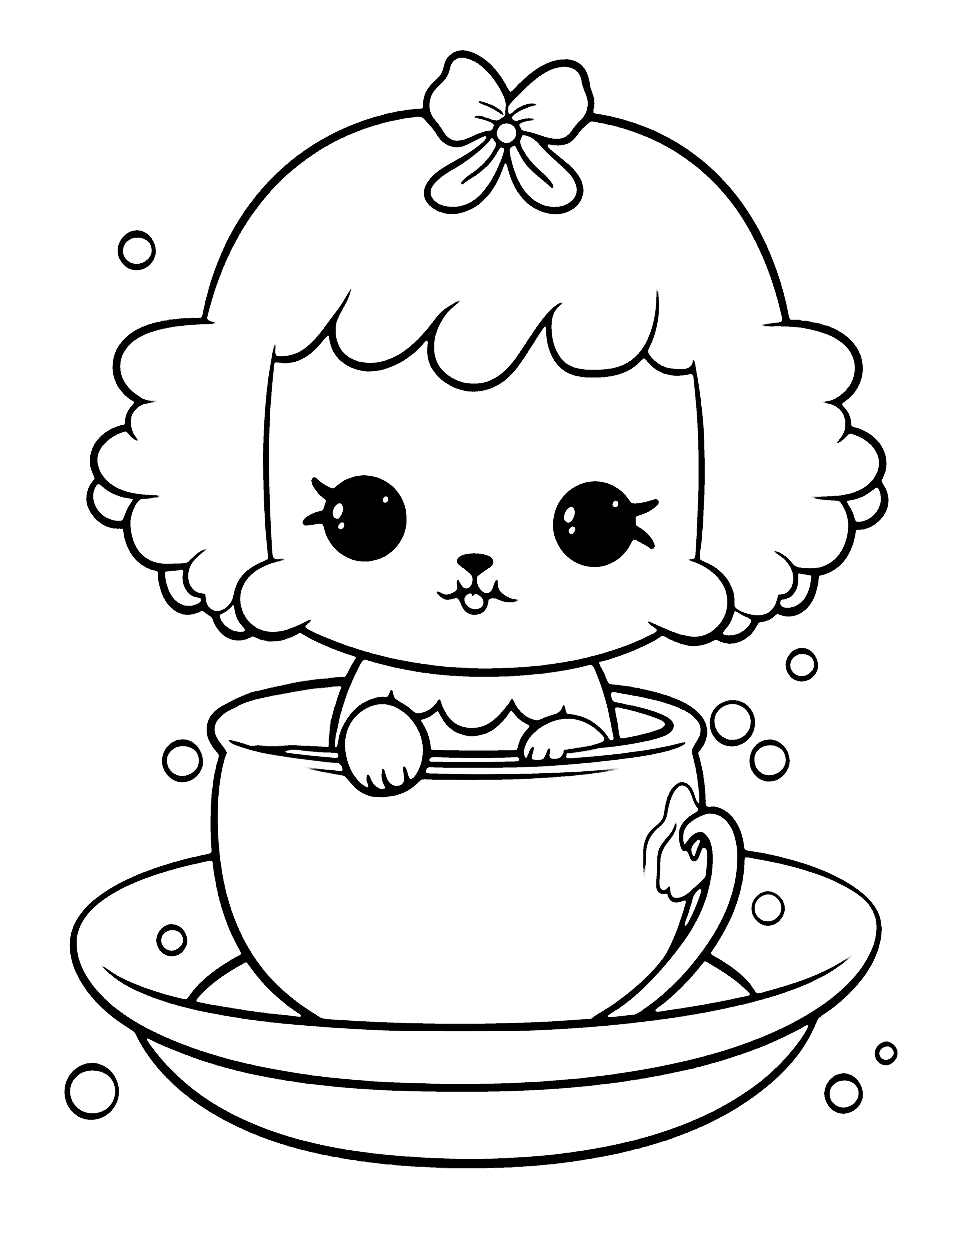 Princess Poodle in a Teacup Kawaii Coloring Page - A Kawaii princess poodle sitting adorably in a colorful teacup.